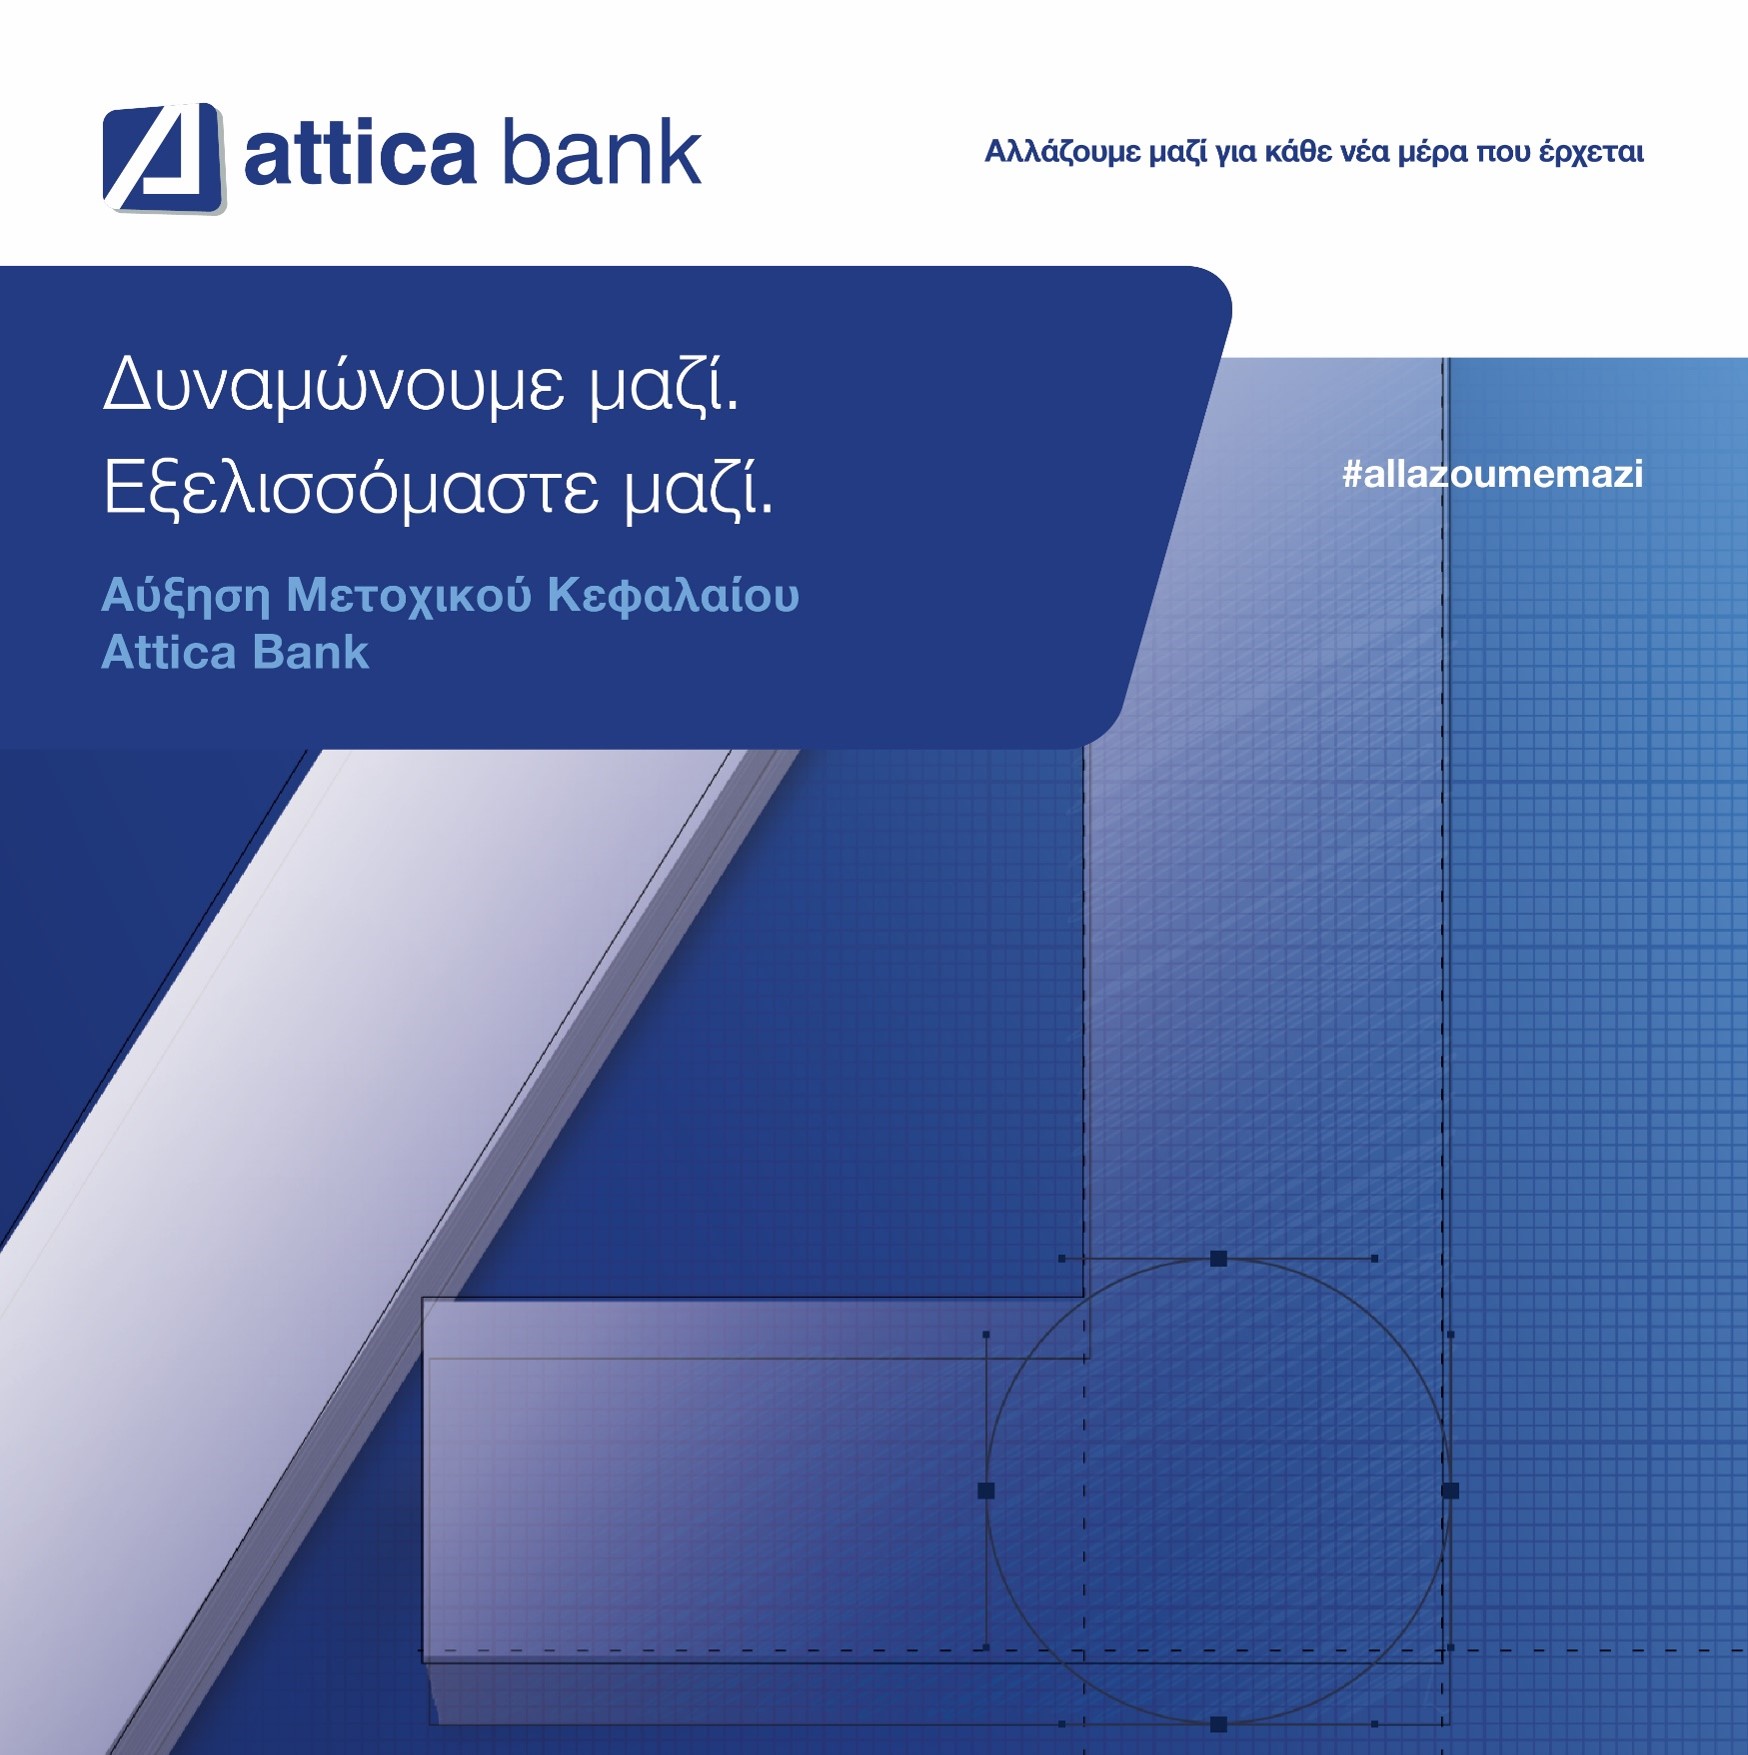 Attica Bank – Ολοκληρώθηκε με επιτυχία η αύξηση μετοχικού κεφαλαίου της τράπεζας